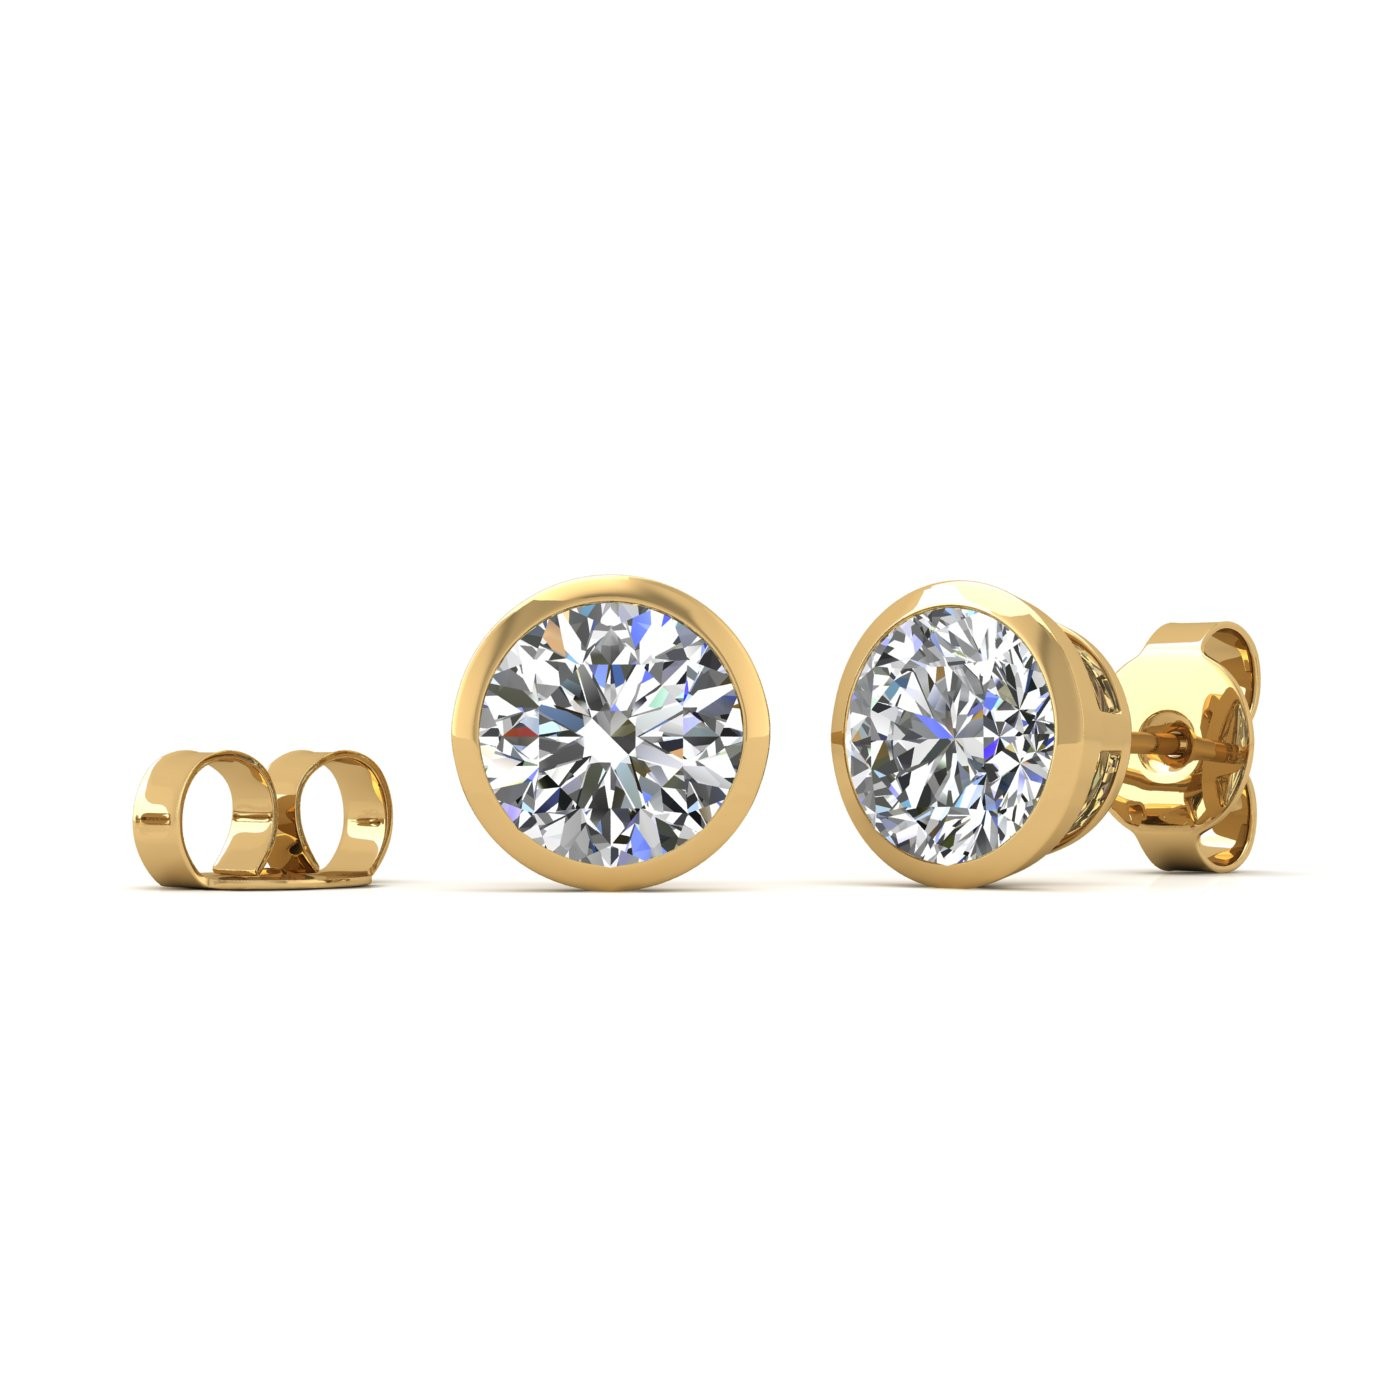 18k white gold 0,7 ct each (1,4 tcw) round brilliant cut diamond bezel set earring studs Photos & images